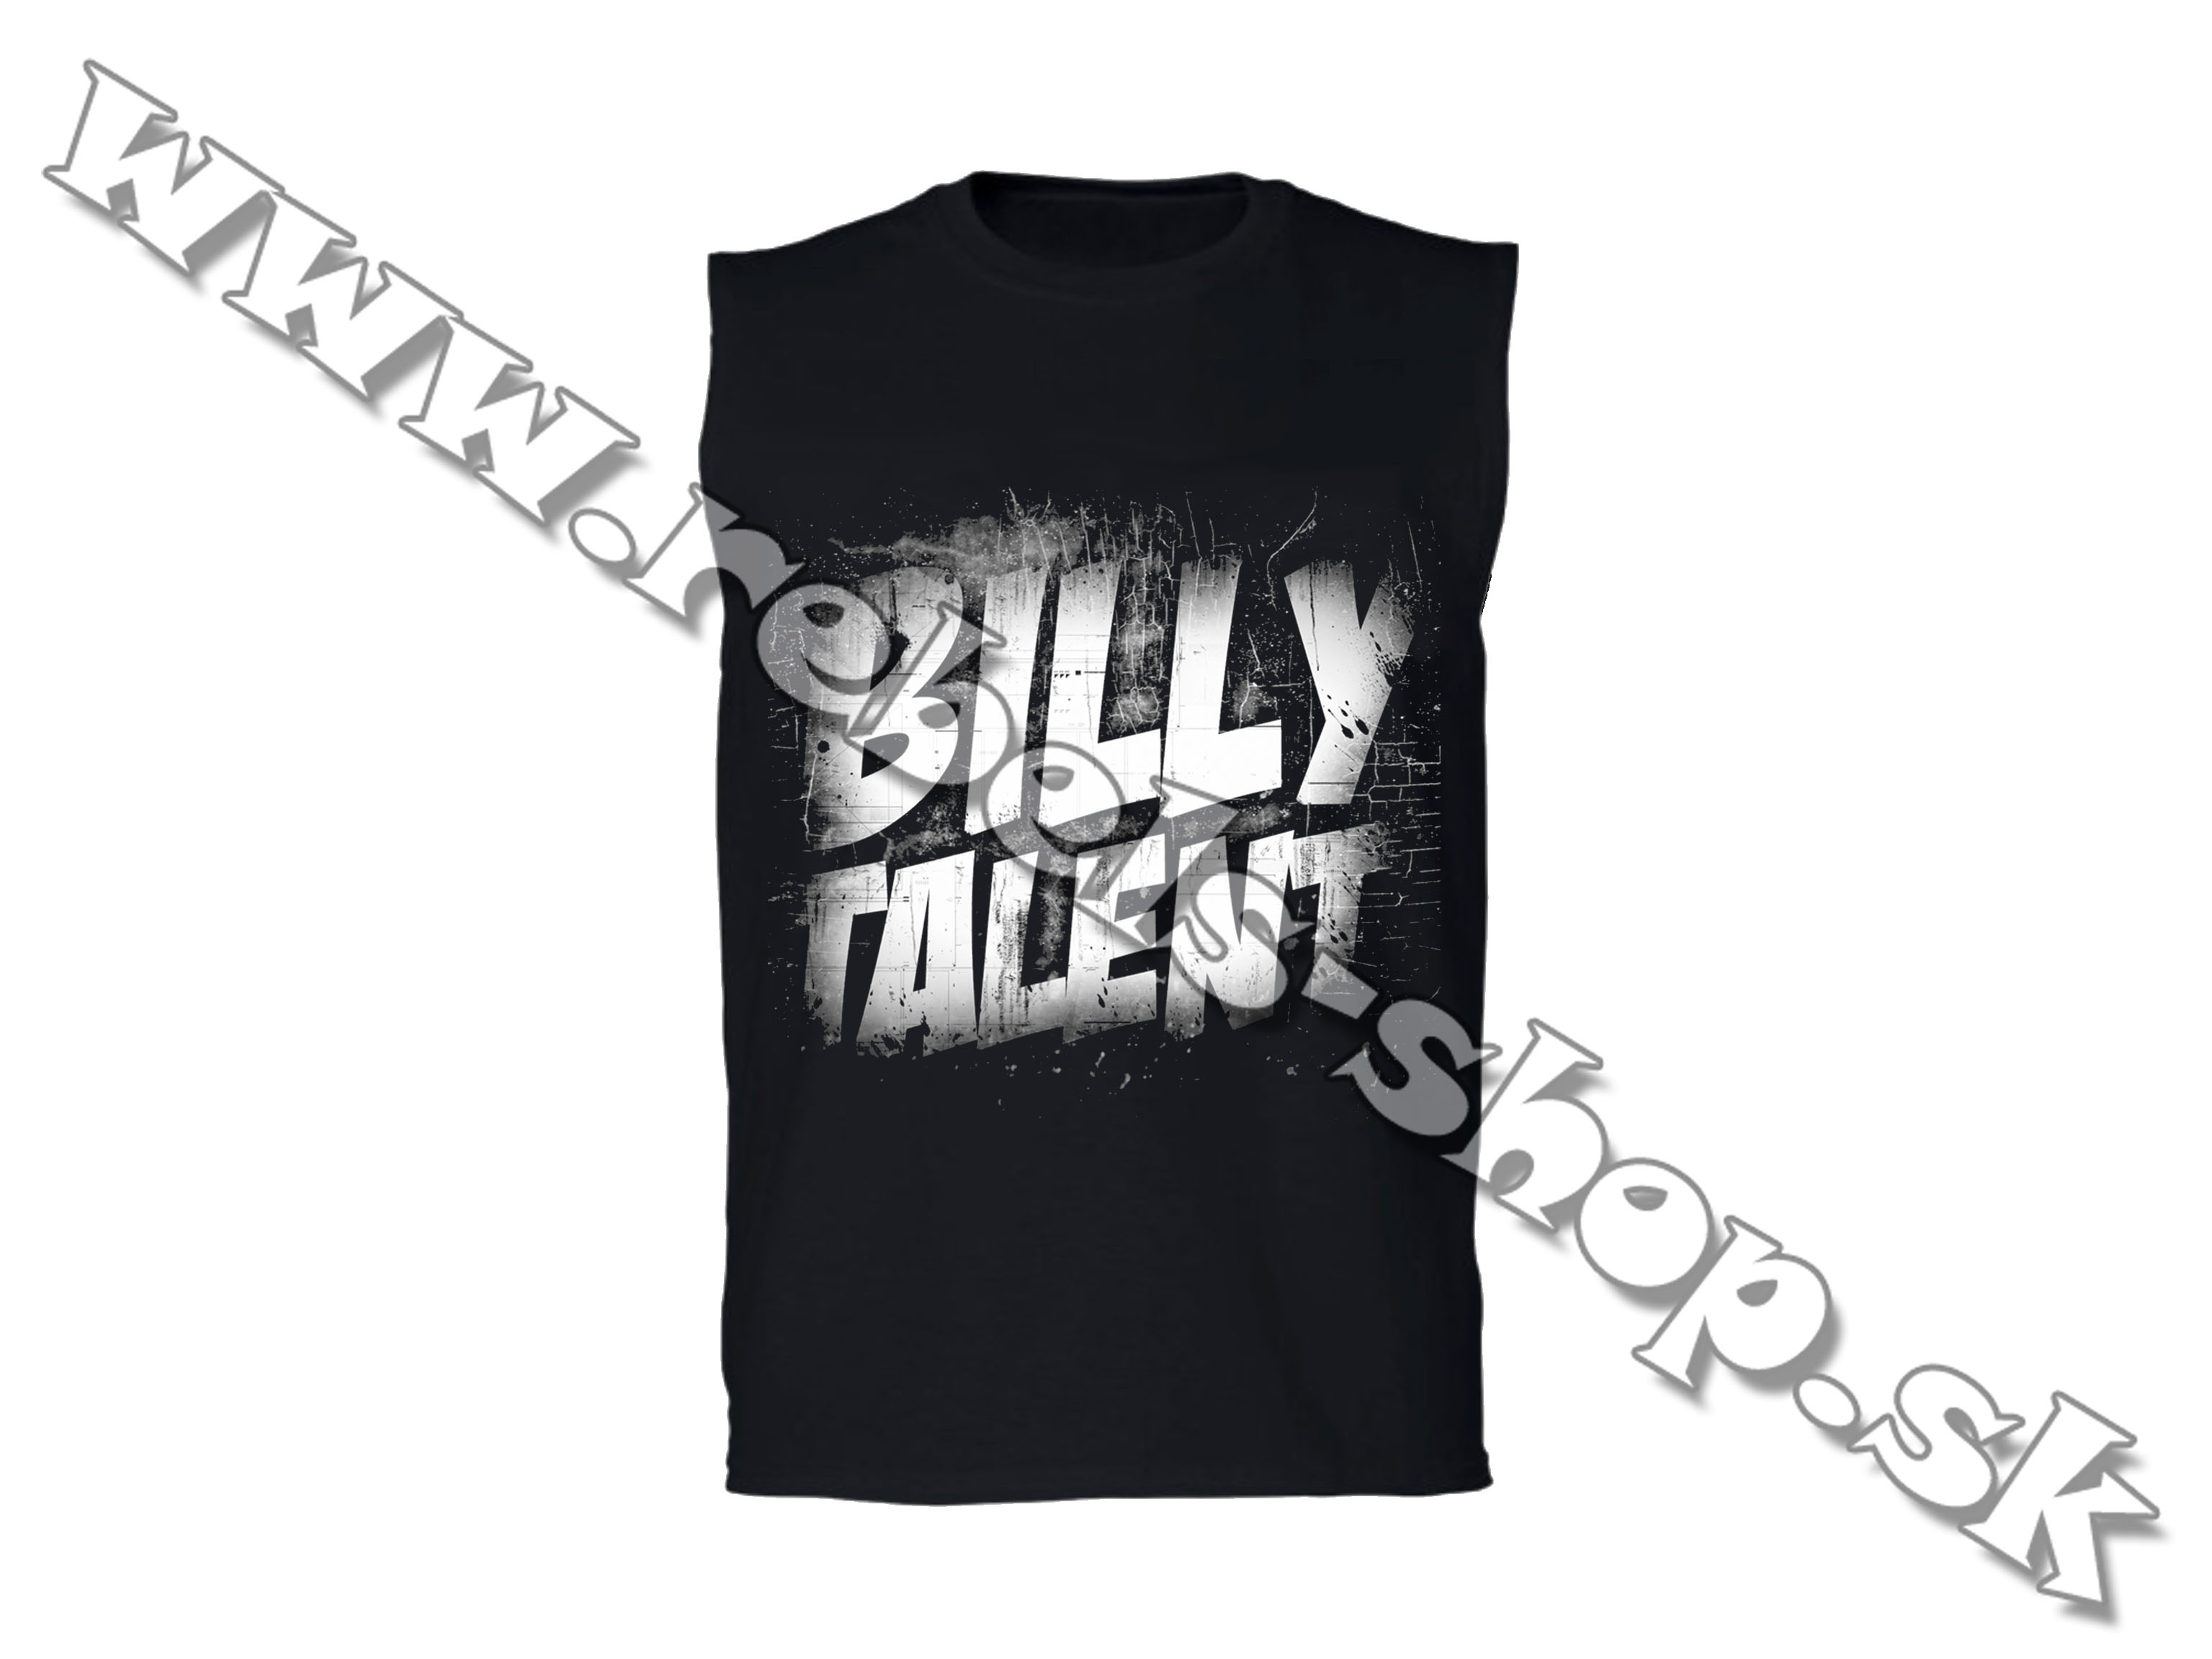 Tričko "Billy Talent"